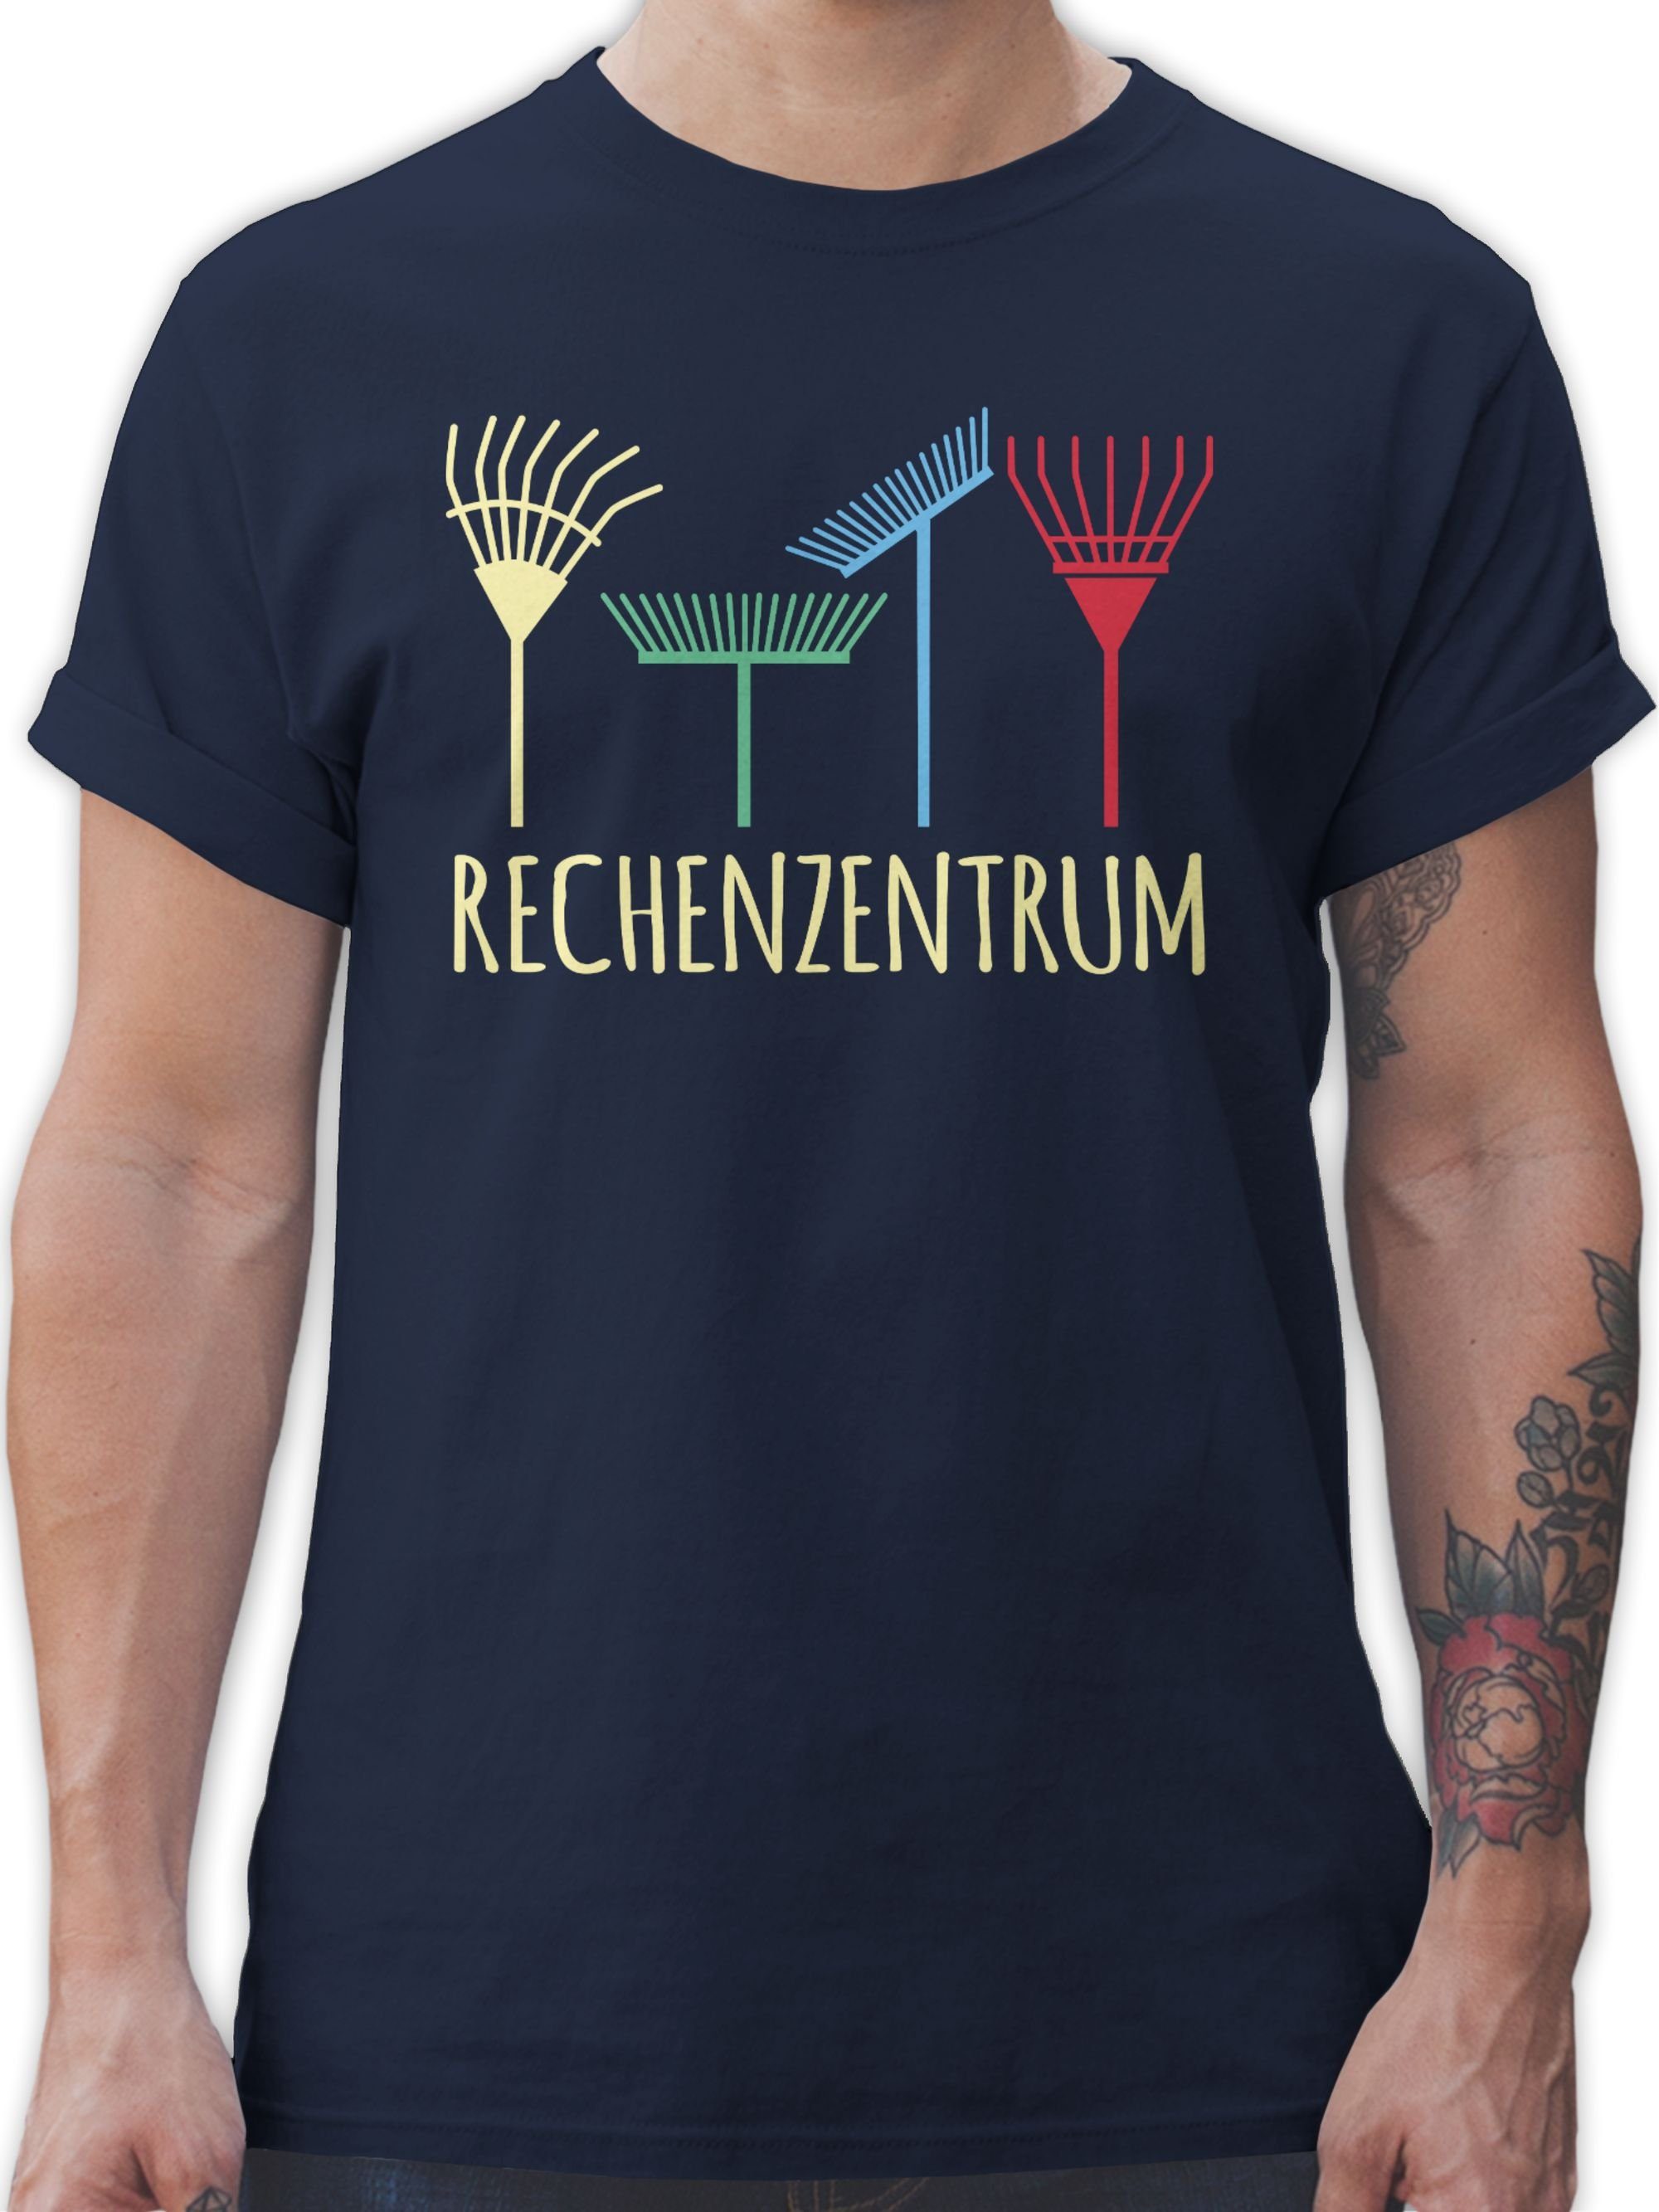 Shirtracer T-Shirt Rechenzentrum - Geschenk Gärtner Gartenarbeit Geschenkidee Hobby Outfit 03 Navy Blau